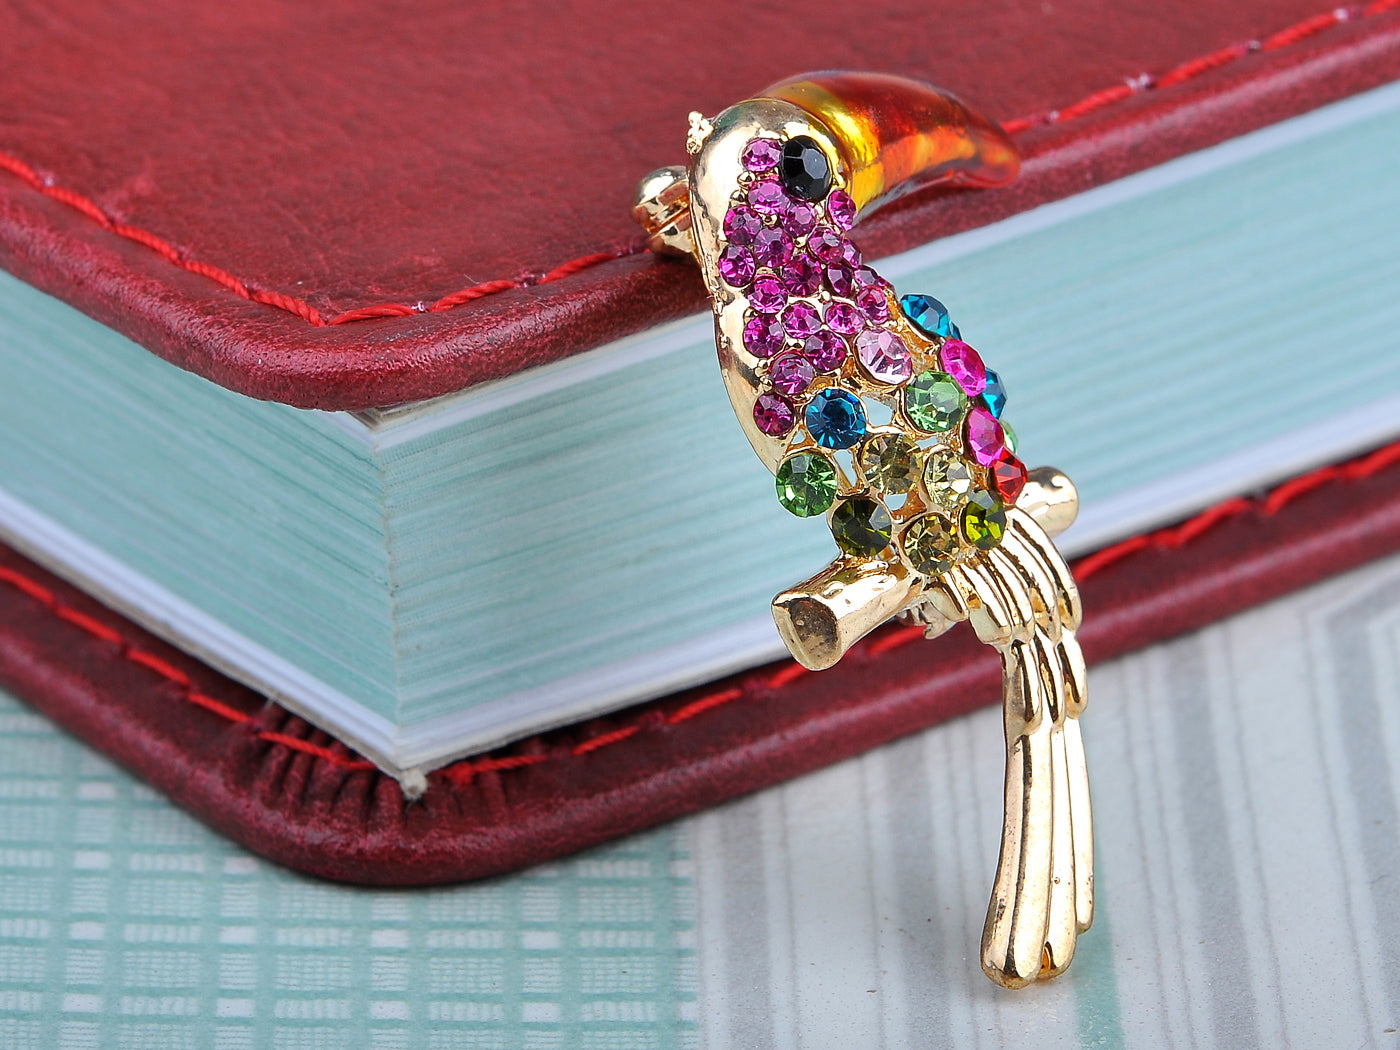 Fuchsia Colorful Ropical Bird Pin Brooch